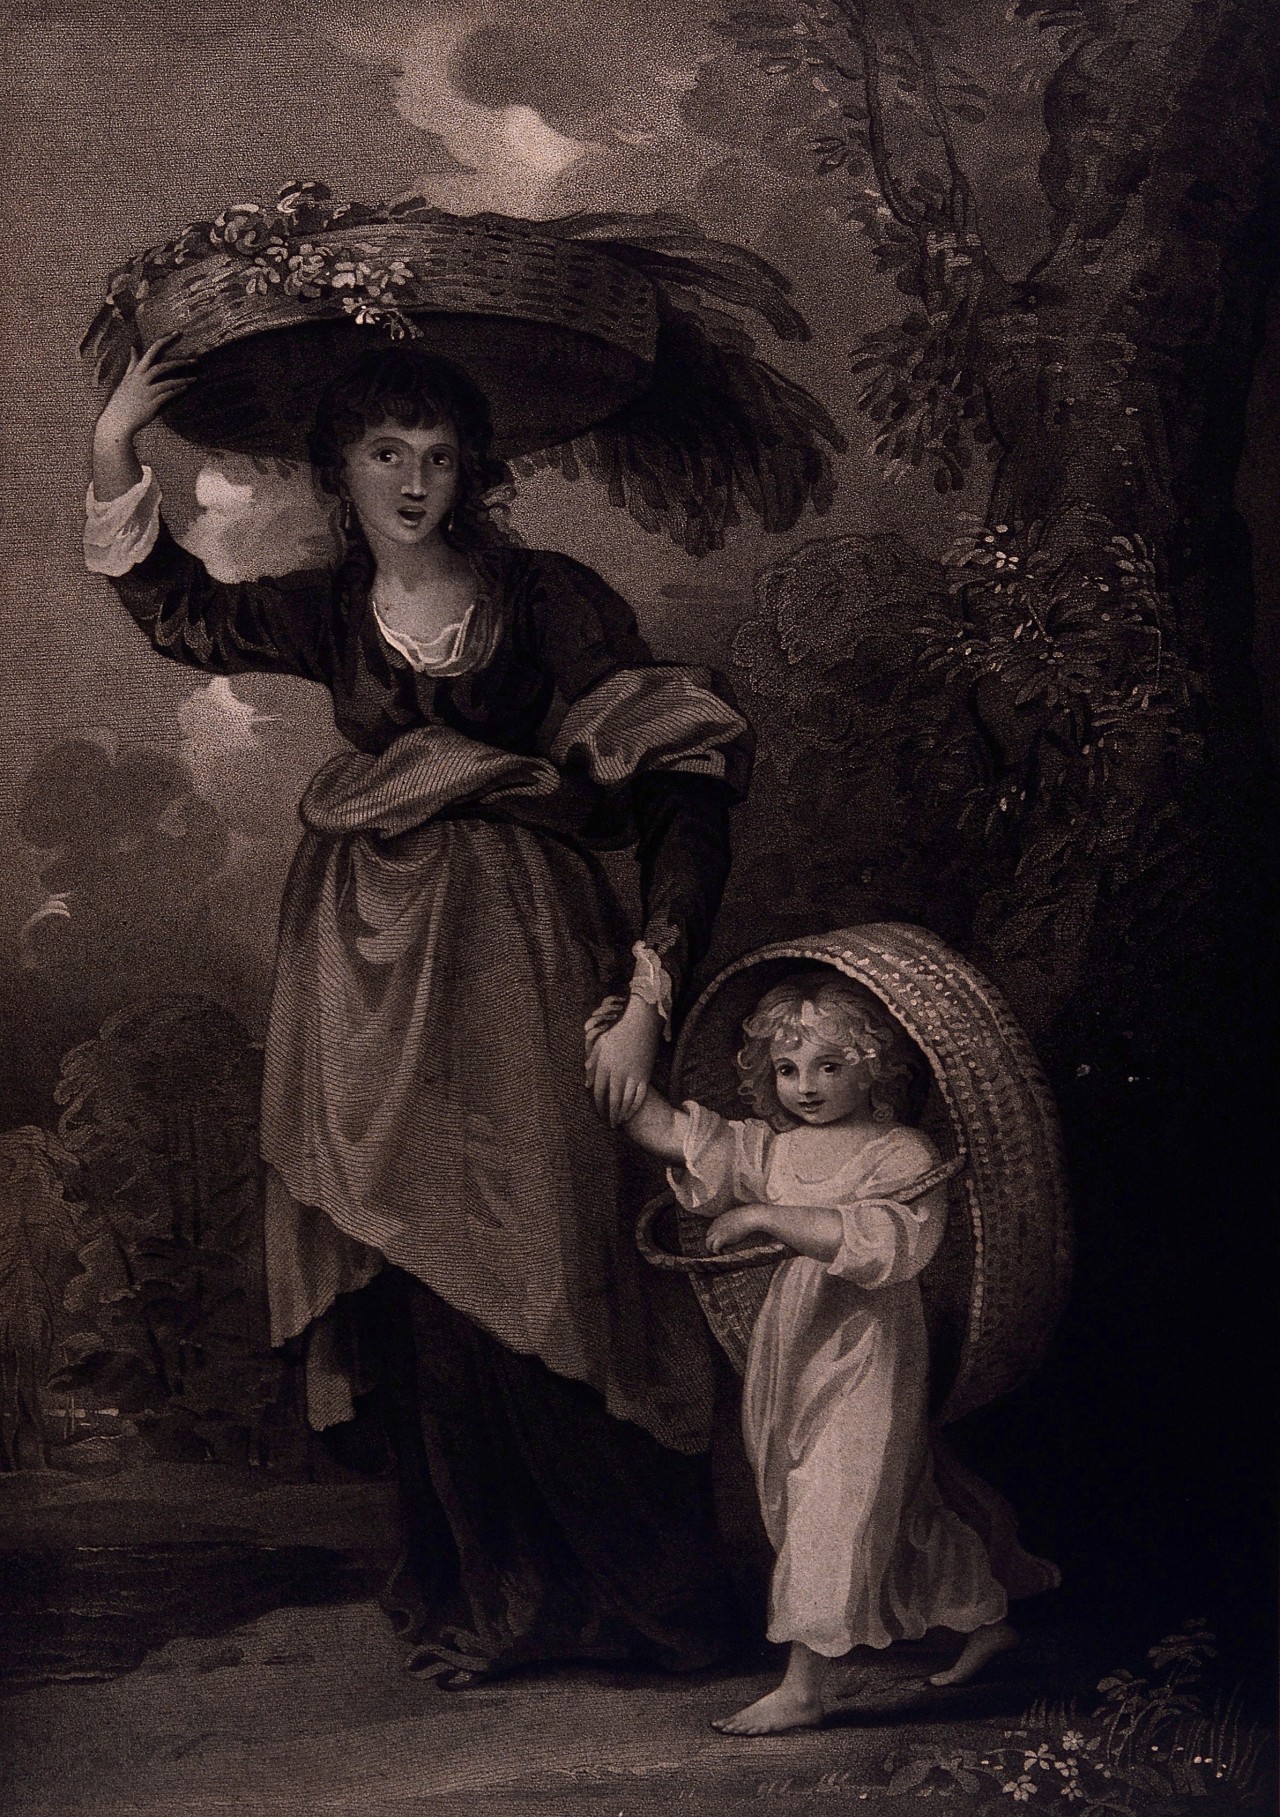 Employment opportunities for girls in the eighteenth-century